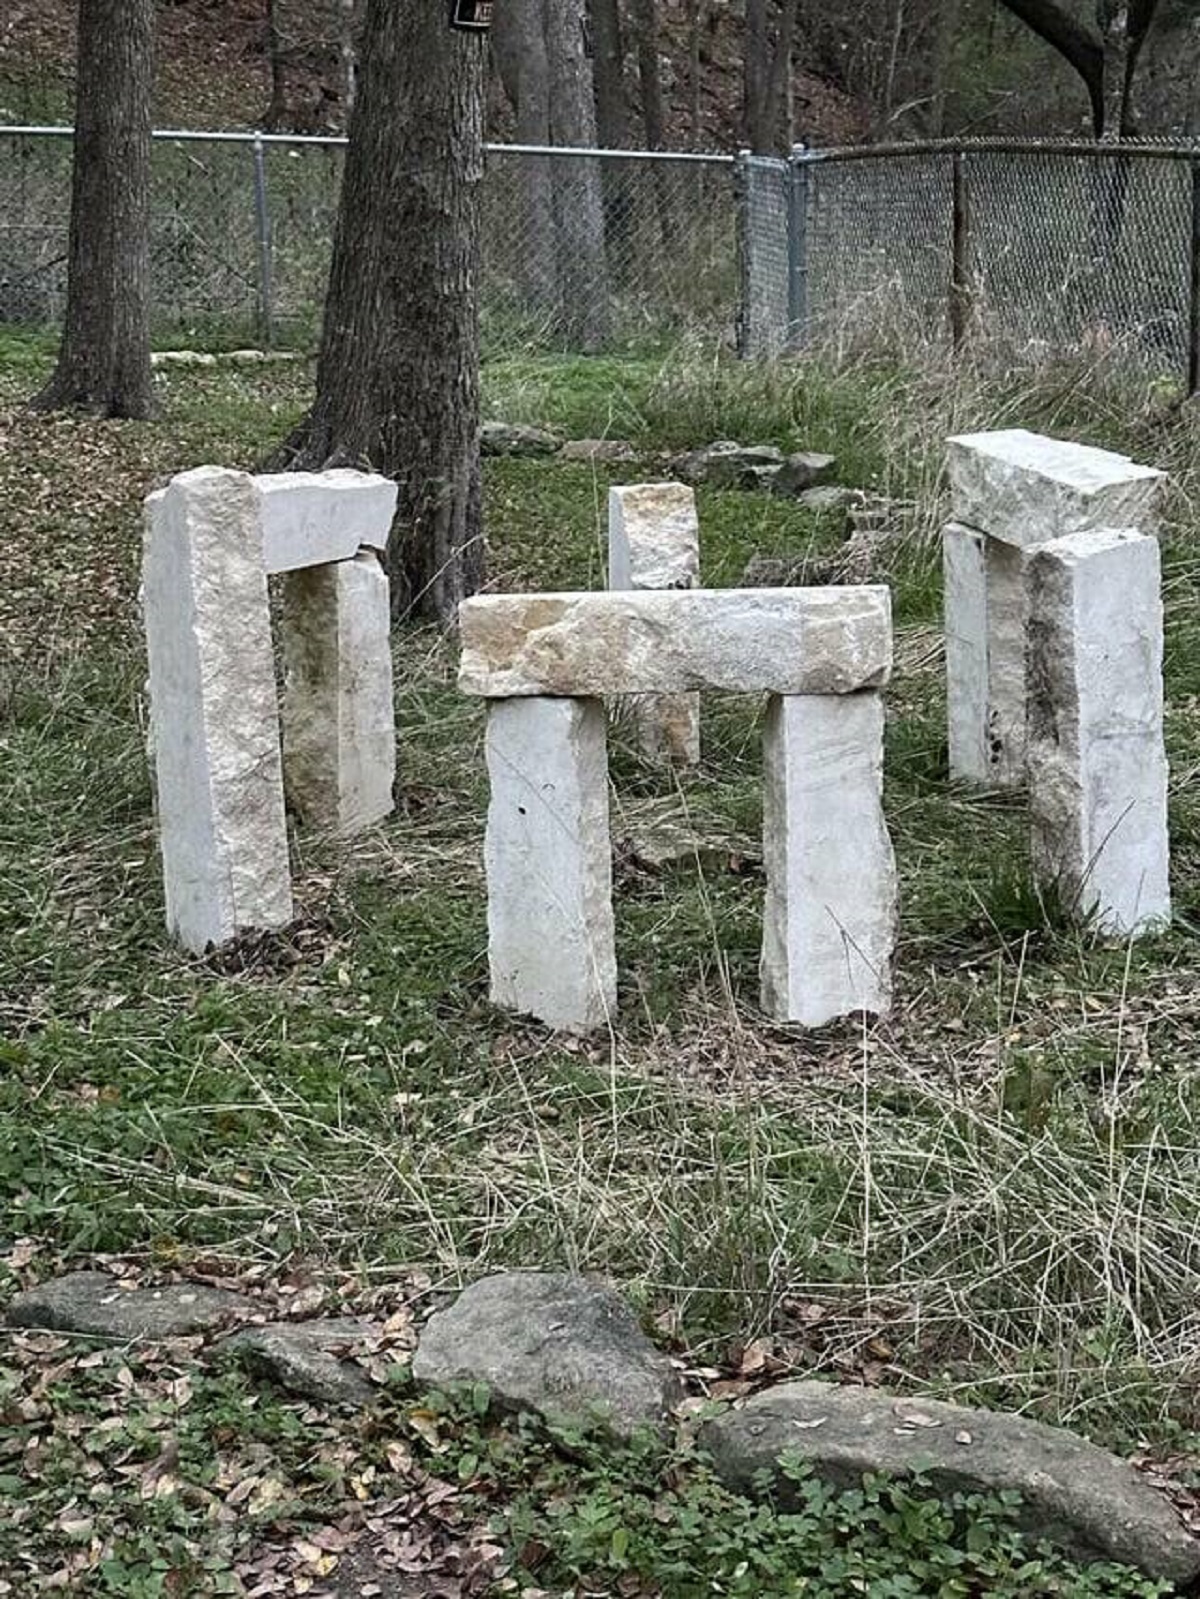 "My neighbor built a mini Stonehenge in his back yard"